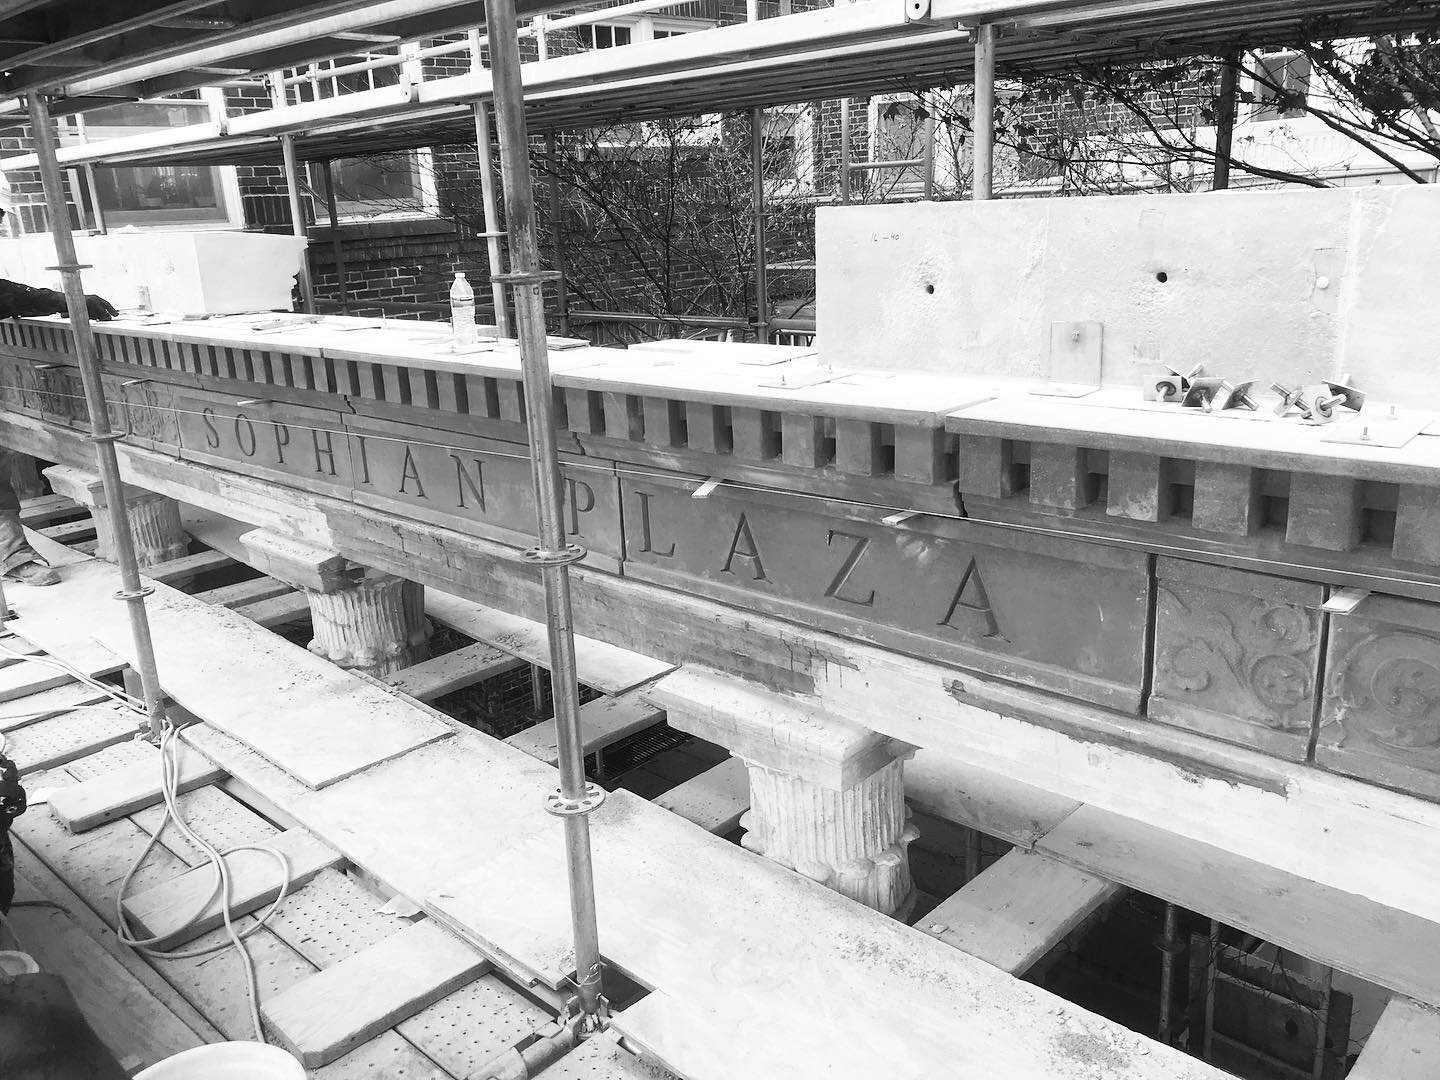 Phase 2 reassembly: installing the new frieze. 

#kansascity #sophianplaza #sophianplazakc #historicarchitecture